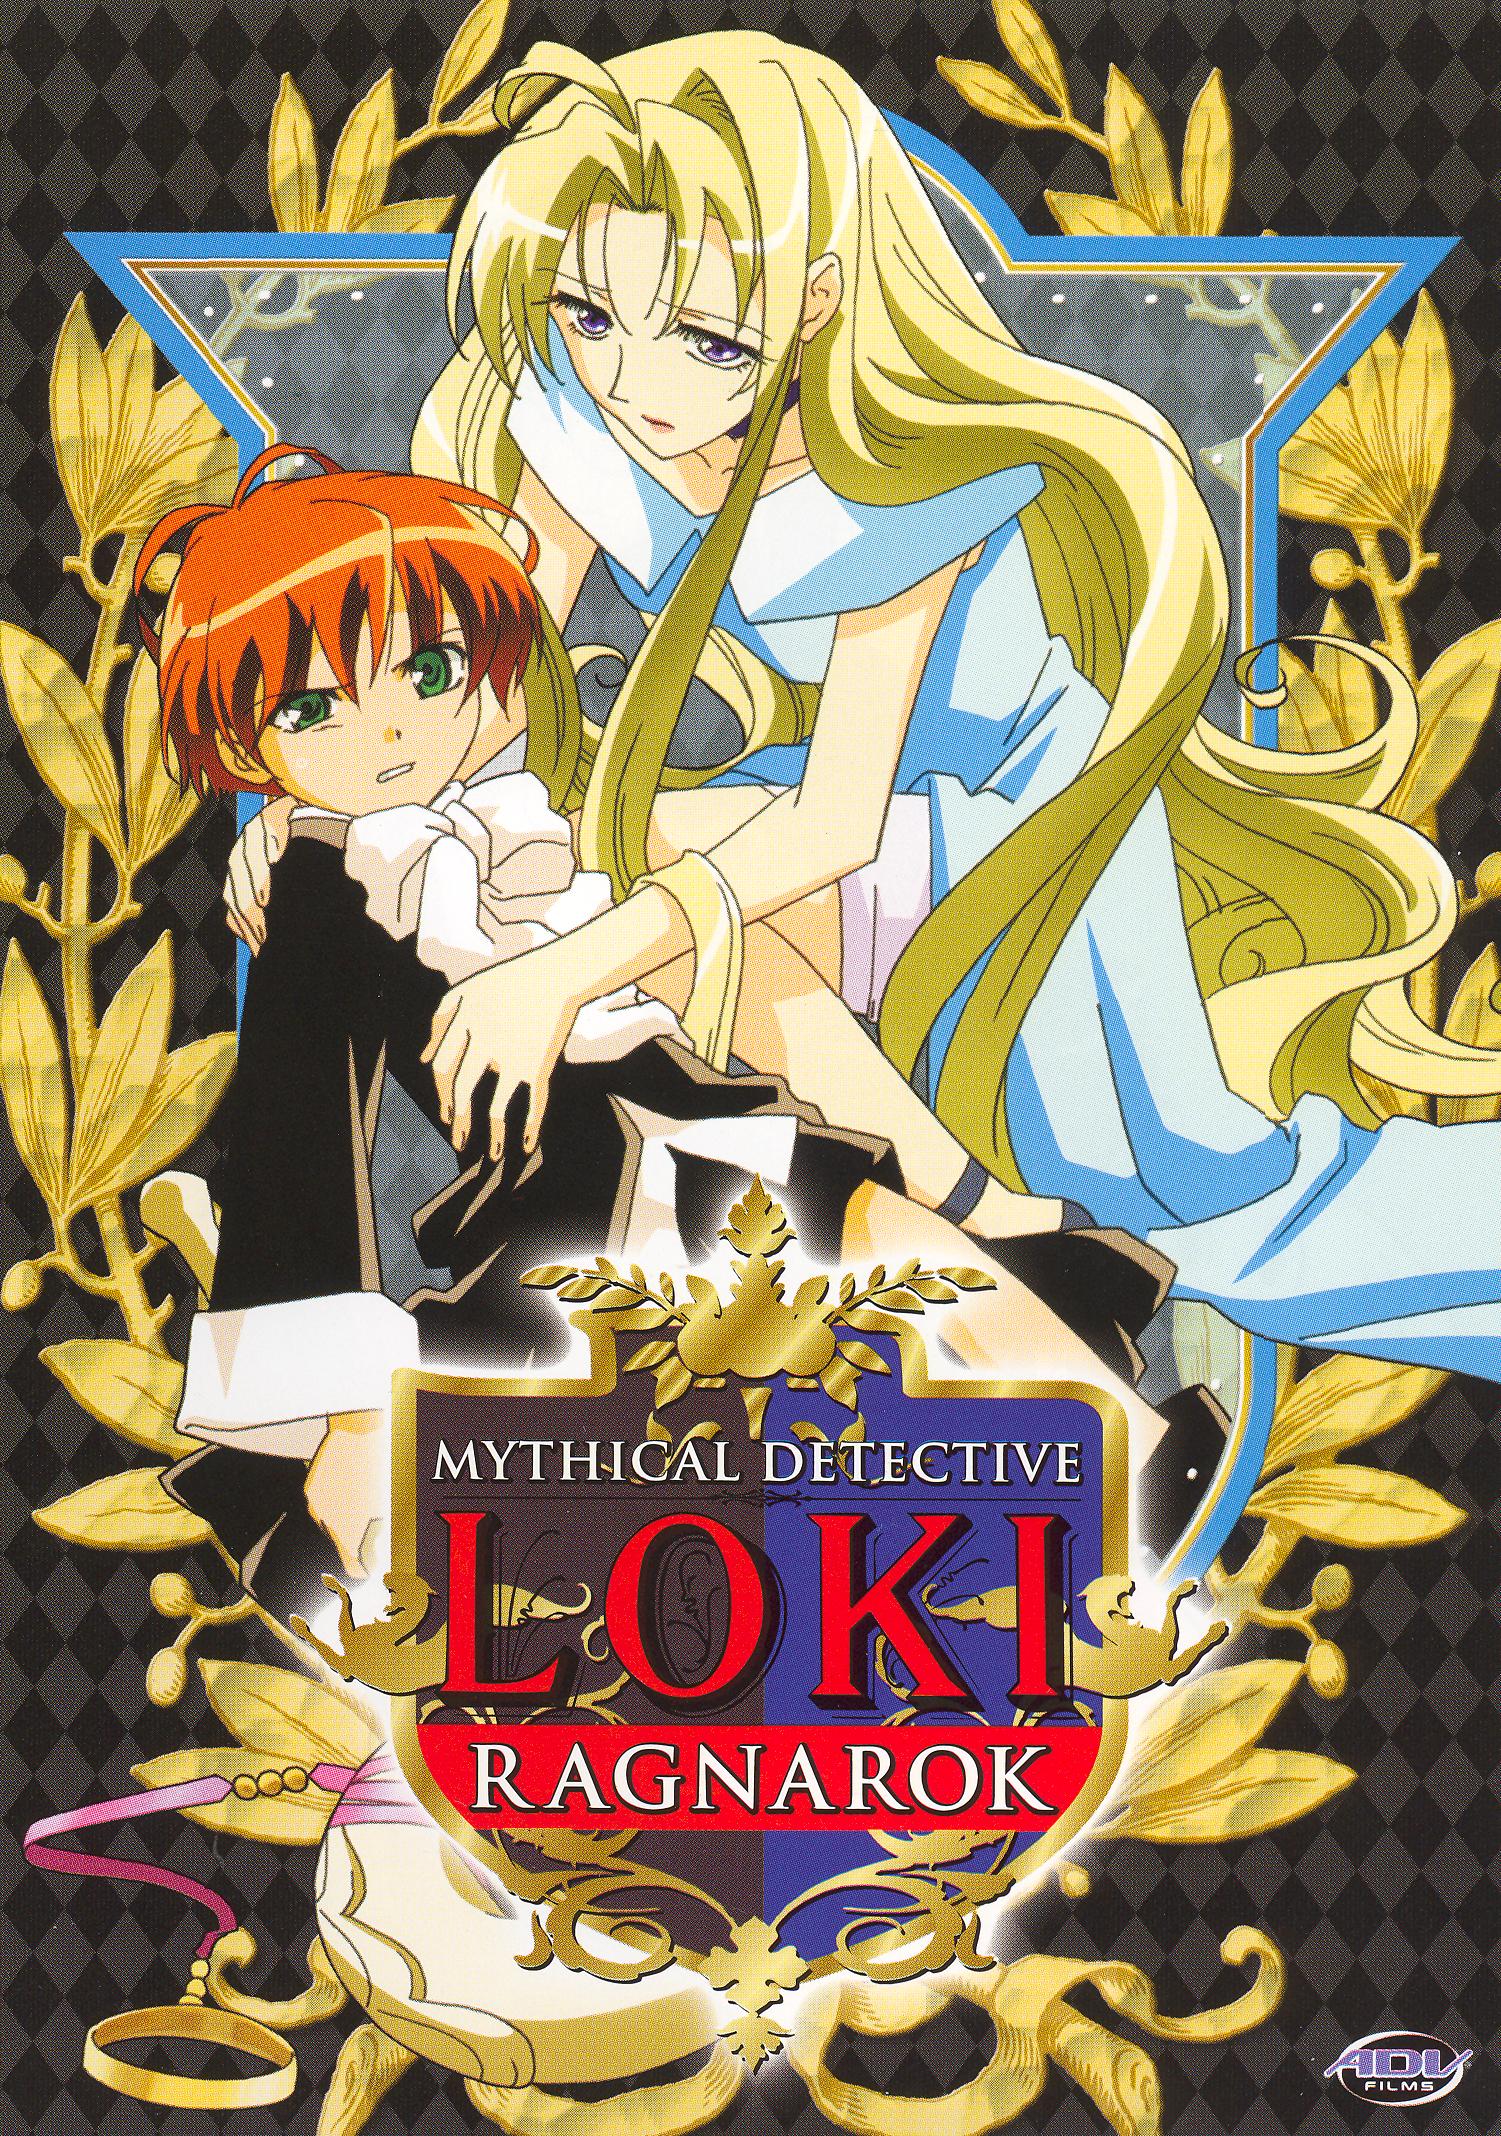 DVD - Ragnarok: The Animation - Volume 5